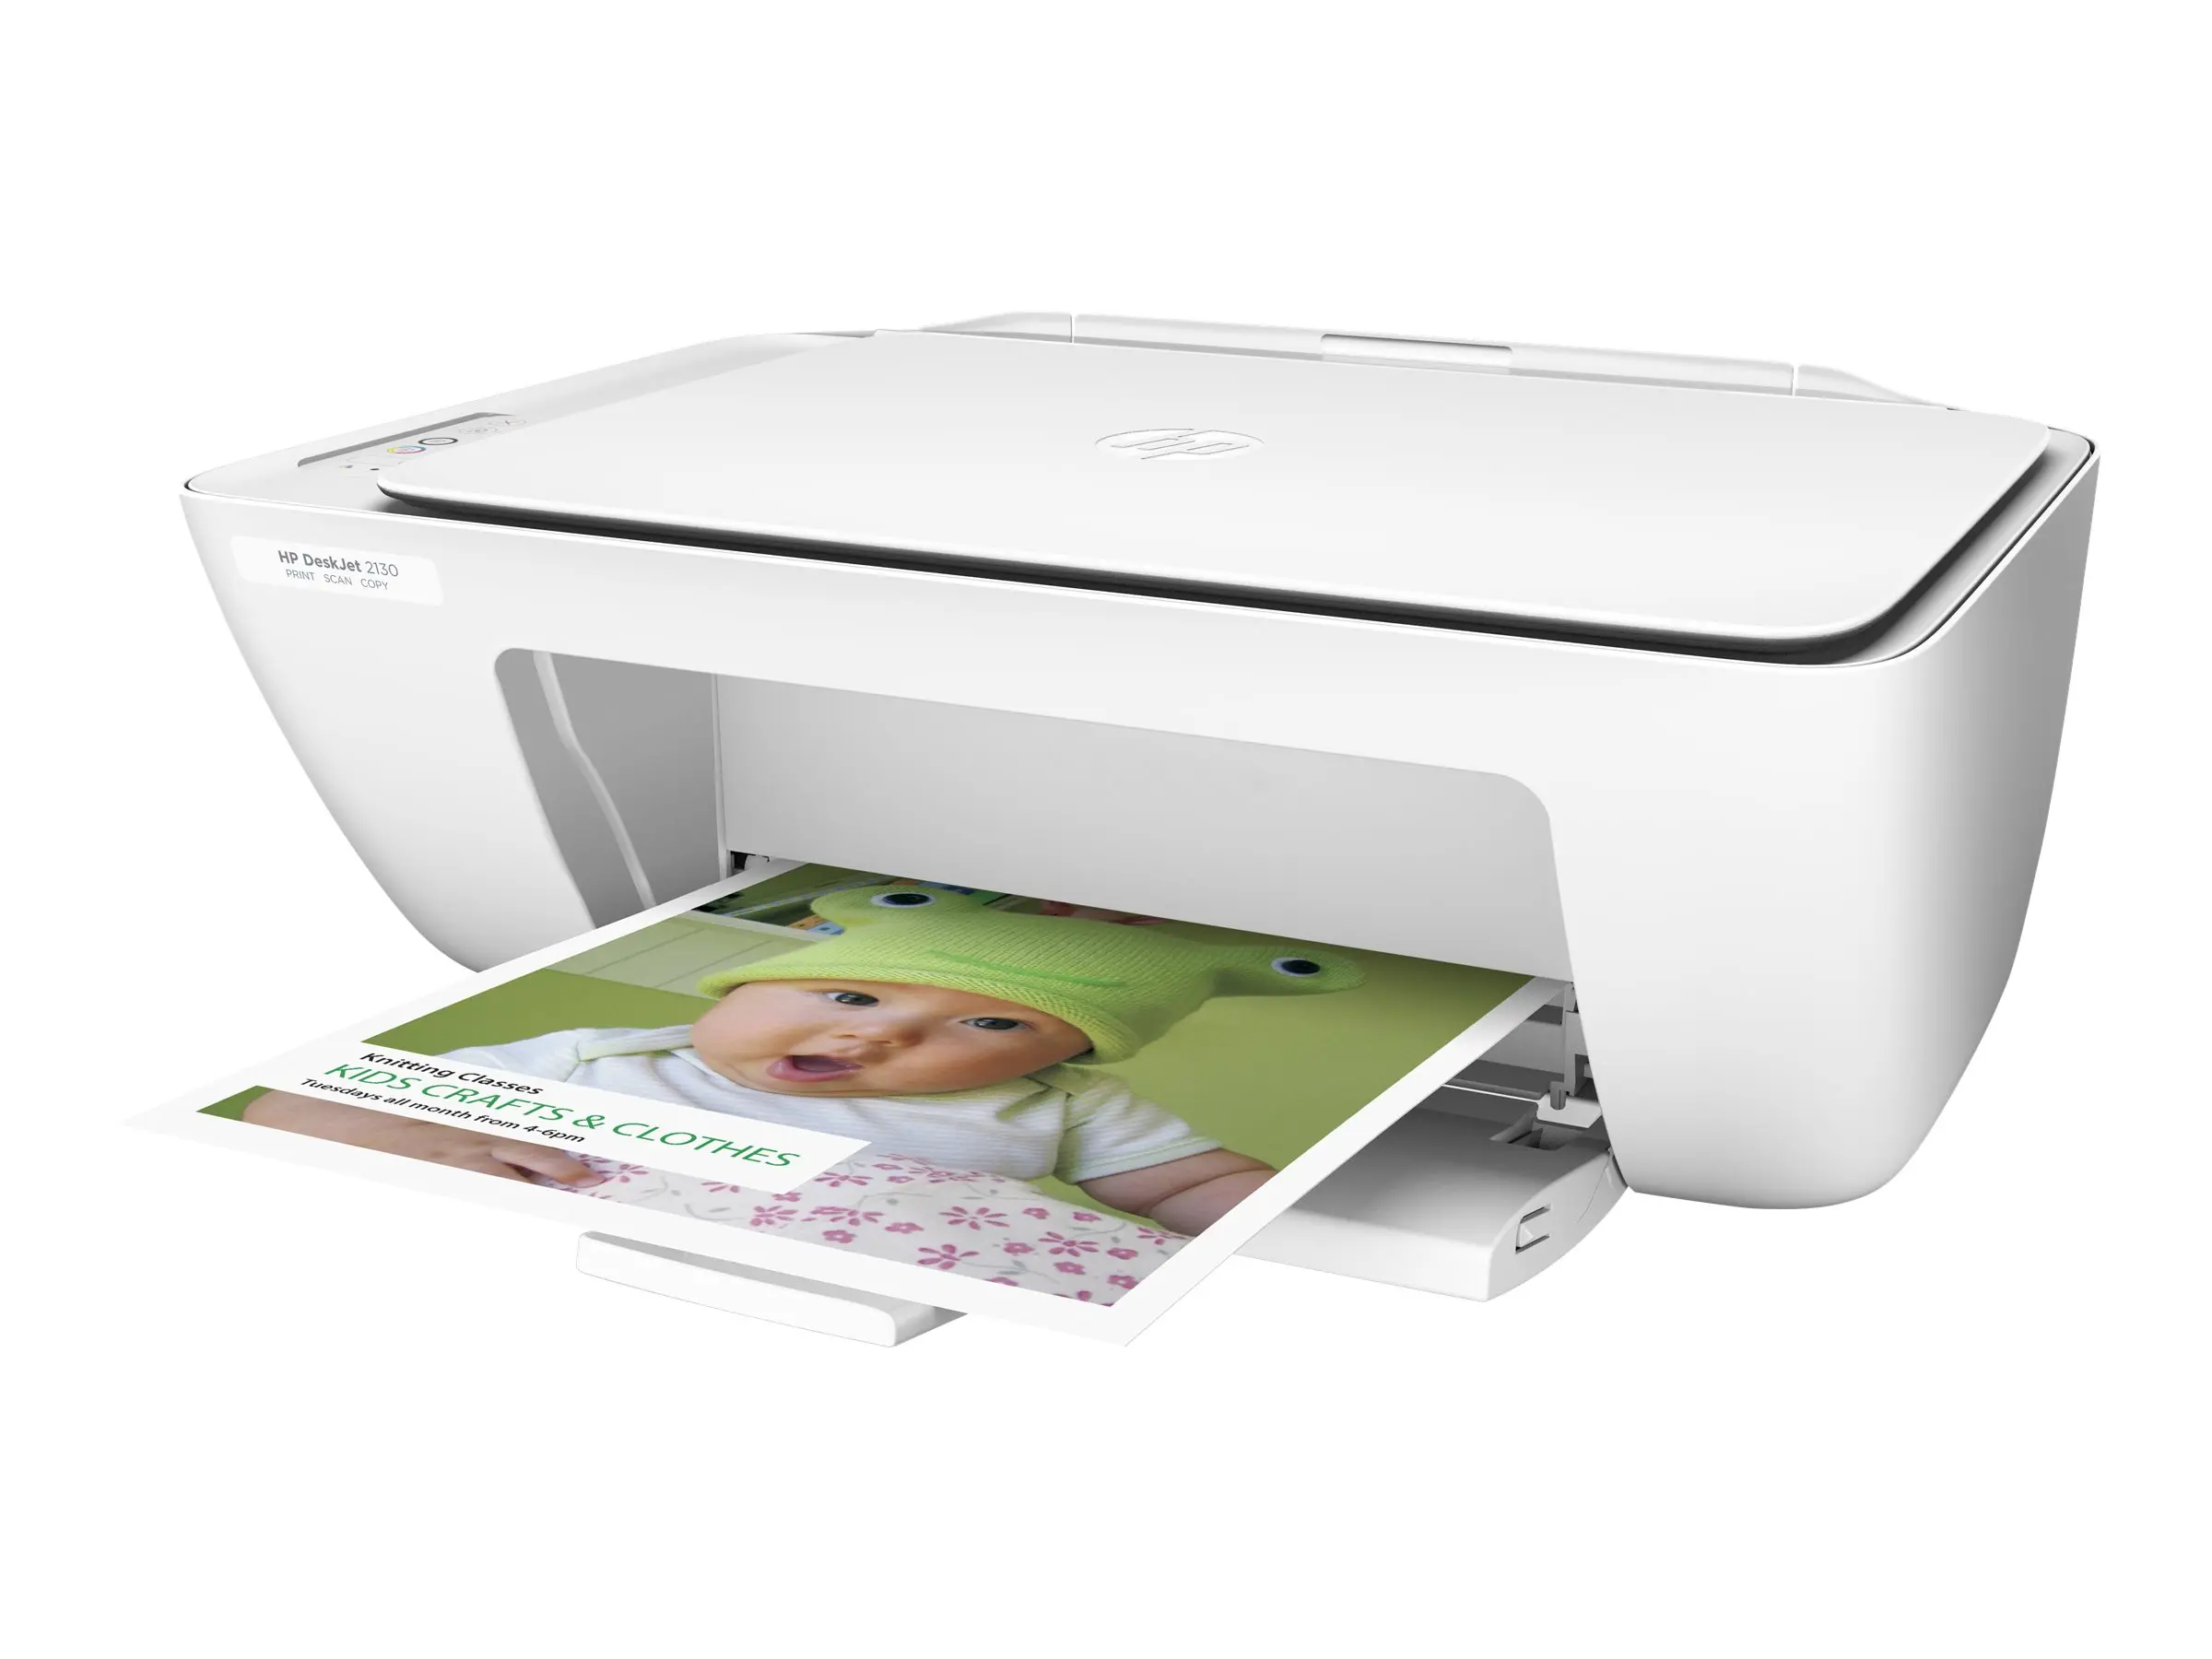 hewlett packard 2130 - What kind of printer is HP DeskJet 2130